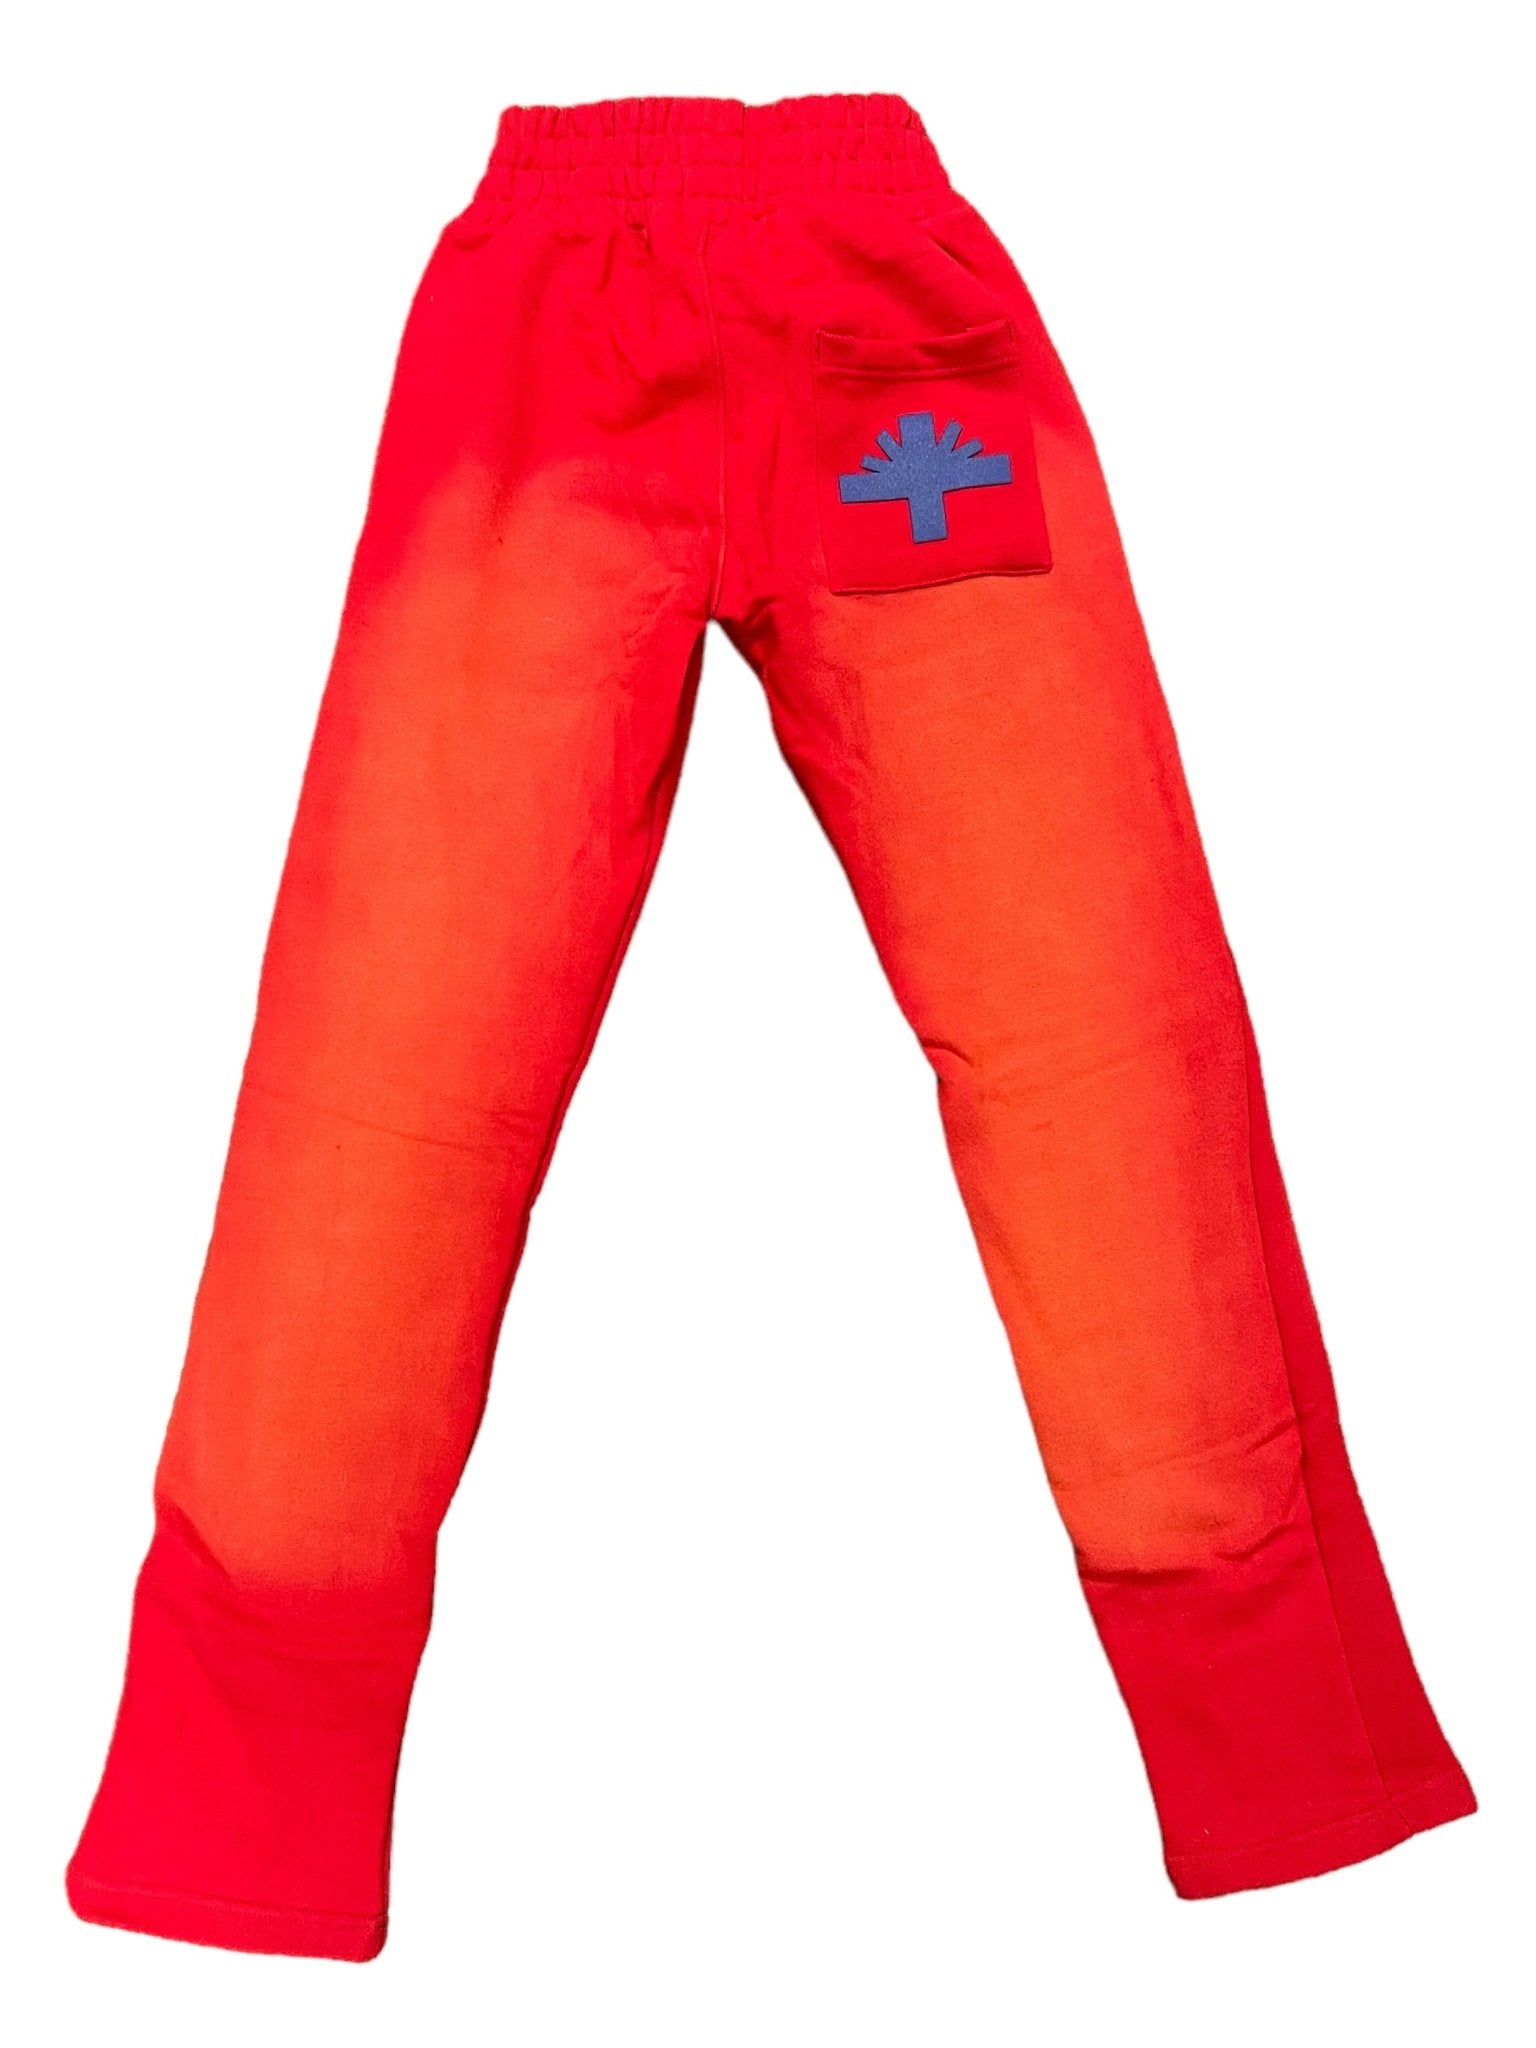 Vertabrae C-2 Sweat Pants Washed (Red & Blue) - Supra Sneakers